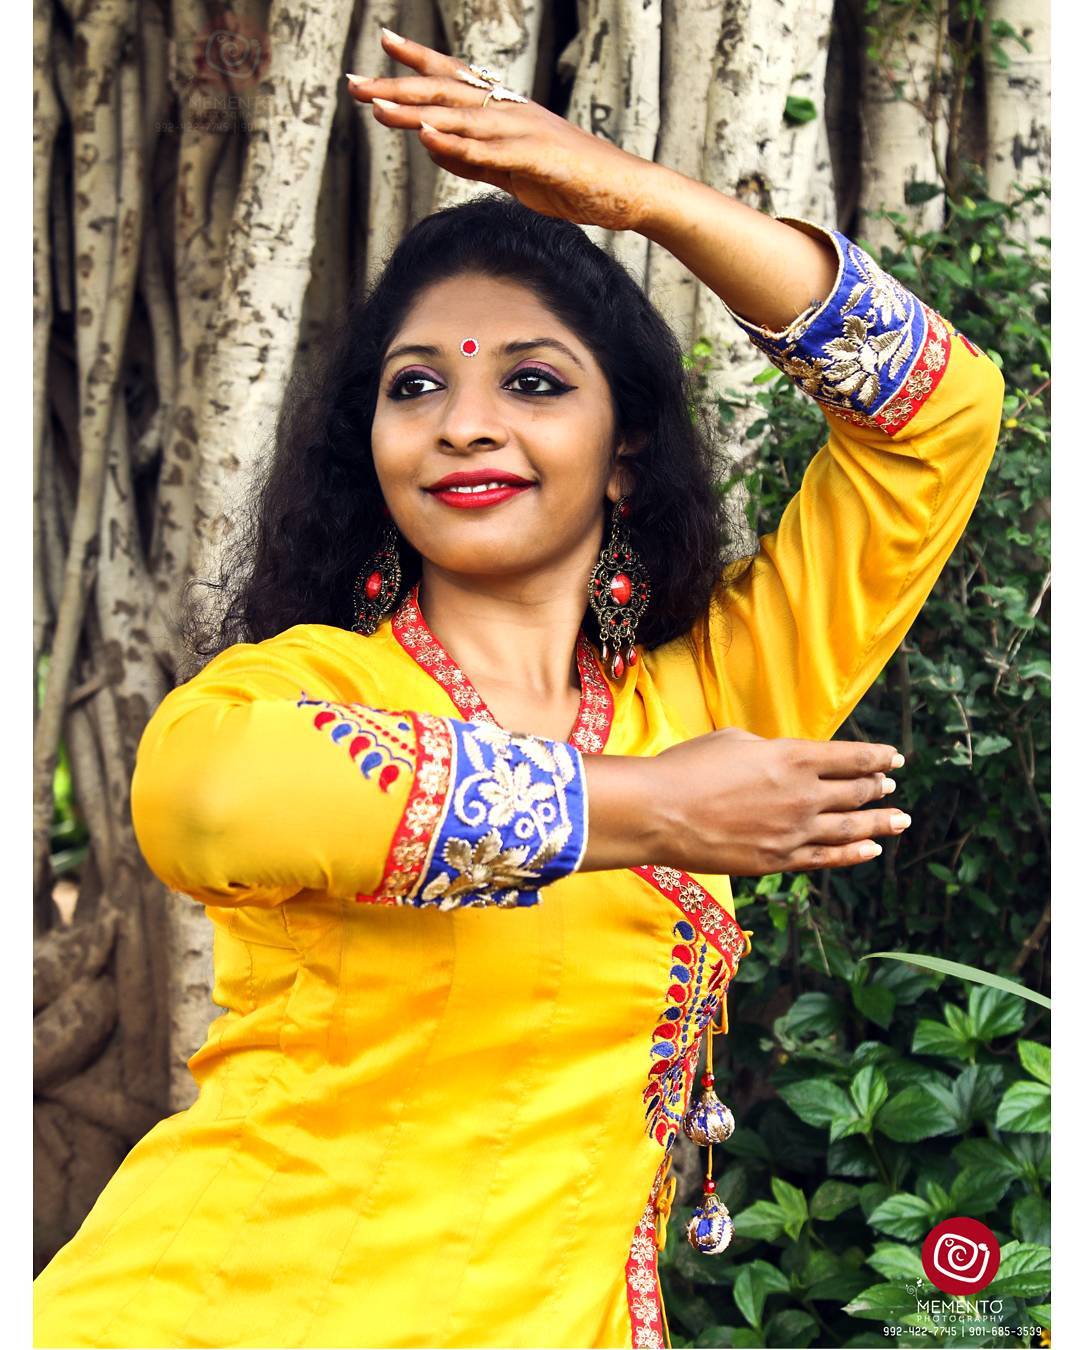 Concept Shoot. : STORY OF THE KATHAK DANCER... #kathak #kathakdance #dance #indiandance #kathakpose #picoftheday #dancepose #ahmedabad #ahmedabaddiaries #instagram_of_ahmedabad #instagram #instamood #ahmedabad_instagram #passion #blackandwhitephotography
#blackandwhite #dancer #lifeaboutdance #ahmedabaddancer #dancephotograhy
#outdoorshoot #indianfashionblogger #shootout_ahmedabad #like4like #follow #followme
#DipsPhotography #MementoPhotography #9924227745 #dipmementophotography #dip_memento_photography